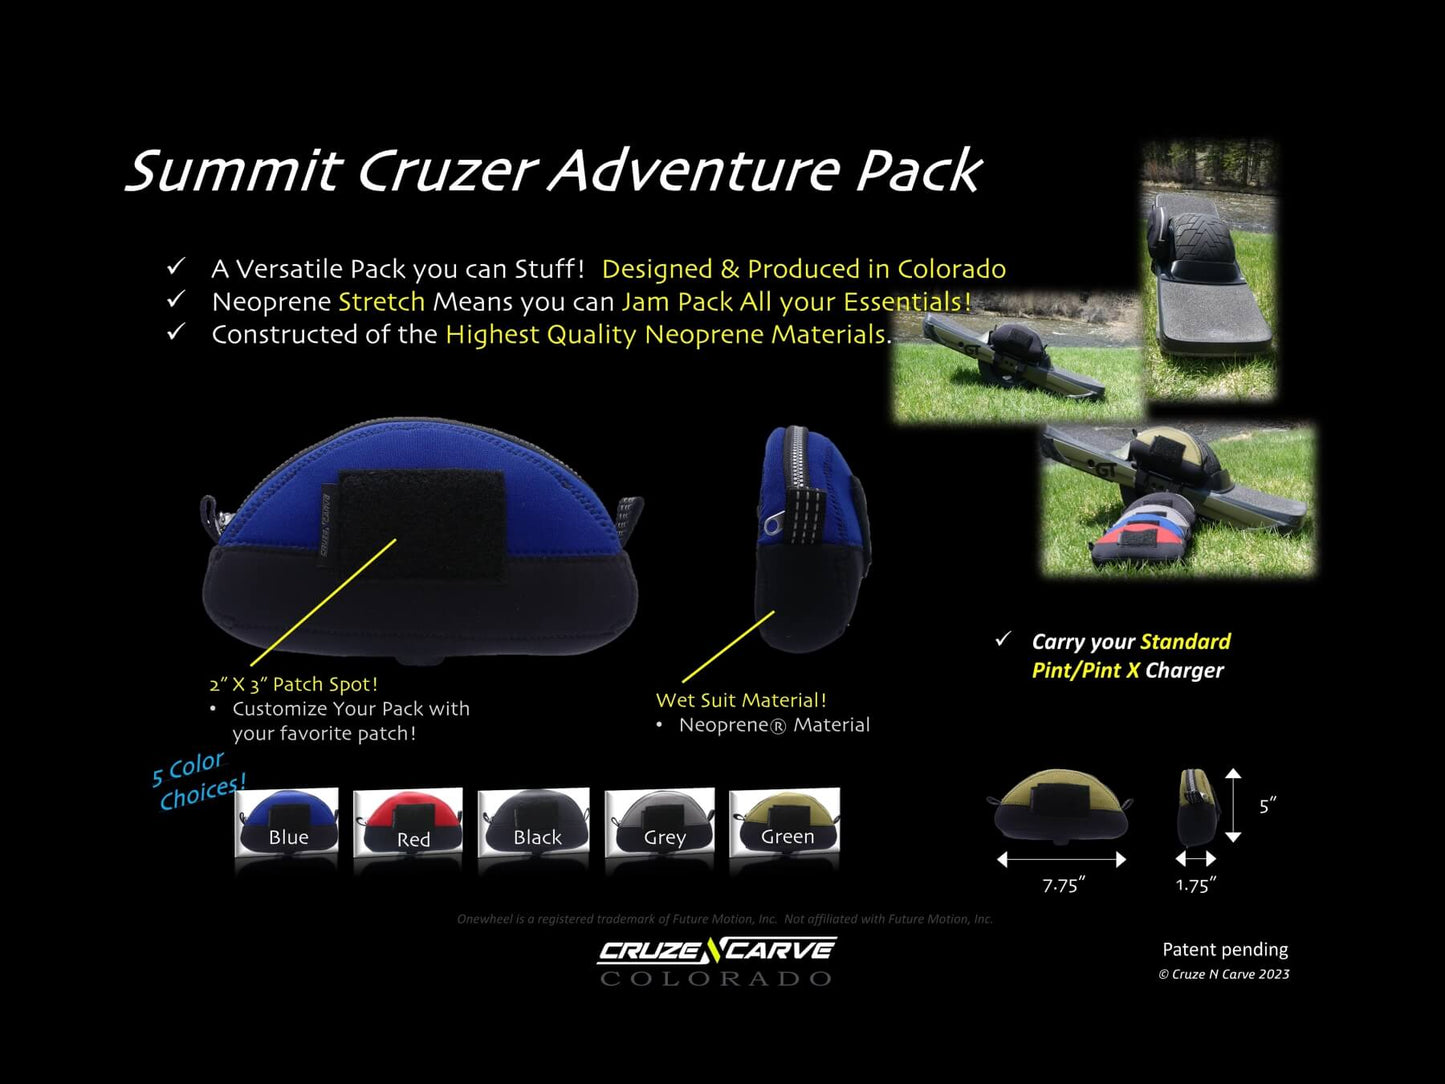 The "Summit Cruzer" Adventure Pack Launch Bundle (Onewheel Gt, Onewheel Pint X/XR/+ Compatible)